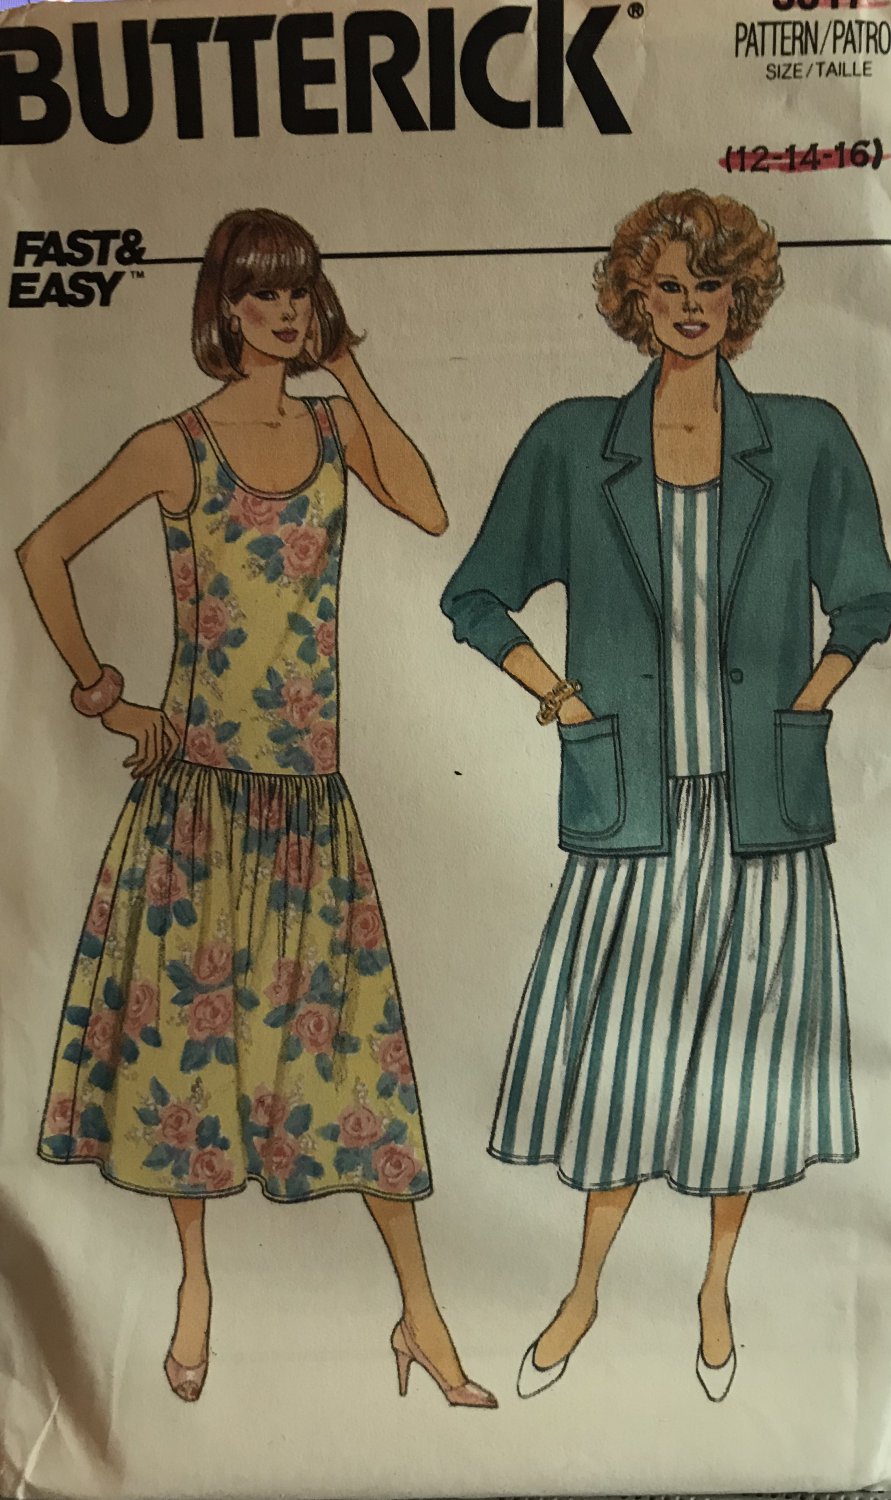 Butterick 3817 Misses' Drop-waist Dress & Jacket Sewing Pattern size 12 - 14 - 16